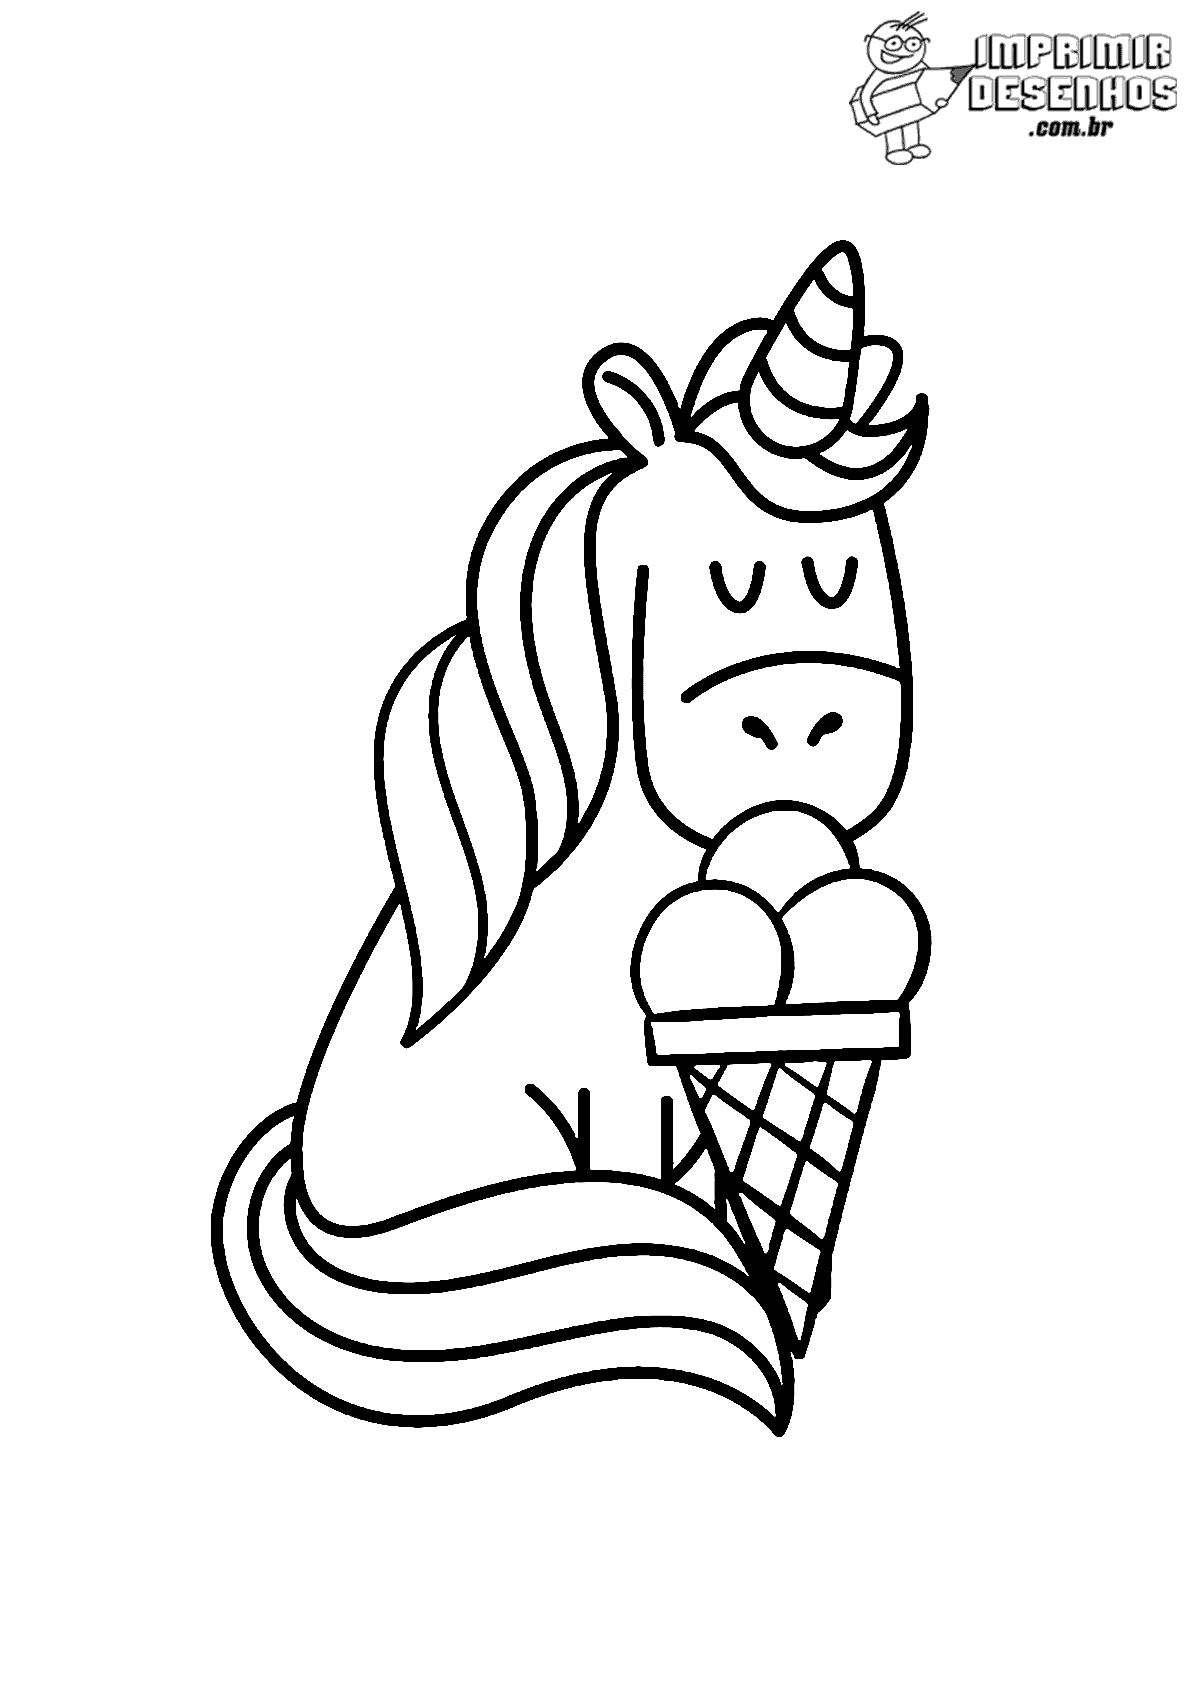 desenho de unicórnio de sorvete para colorir 13345671 Vetor no Vecteezy